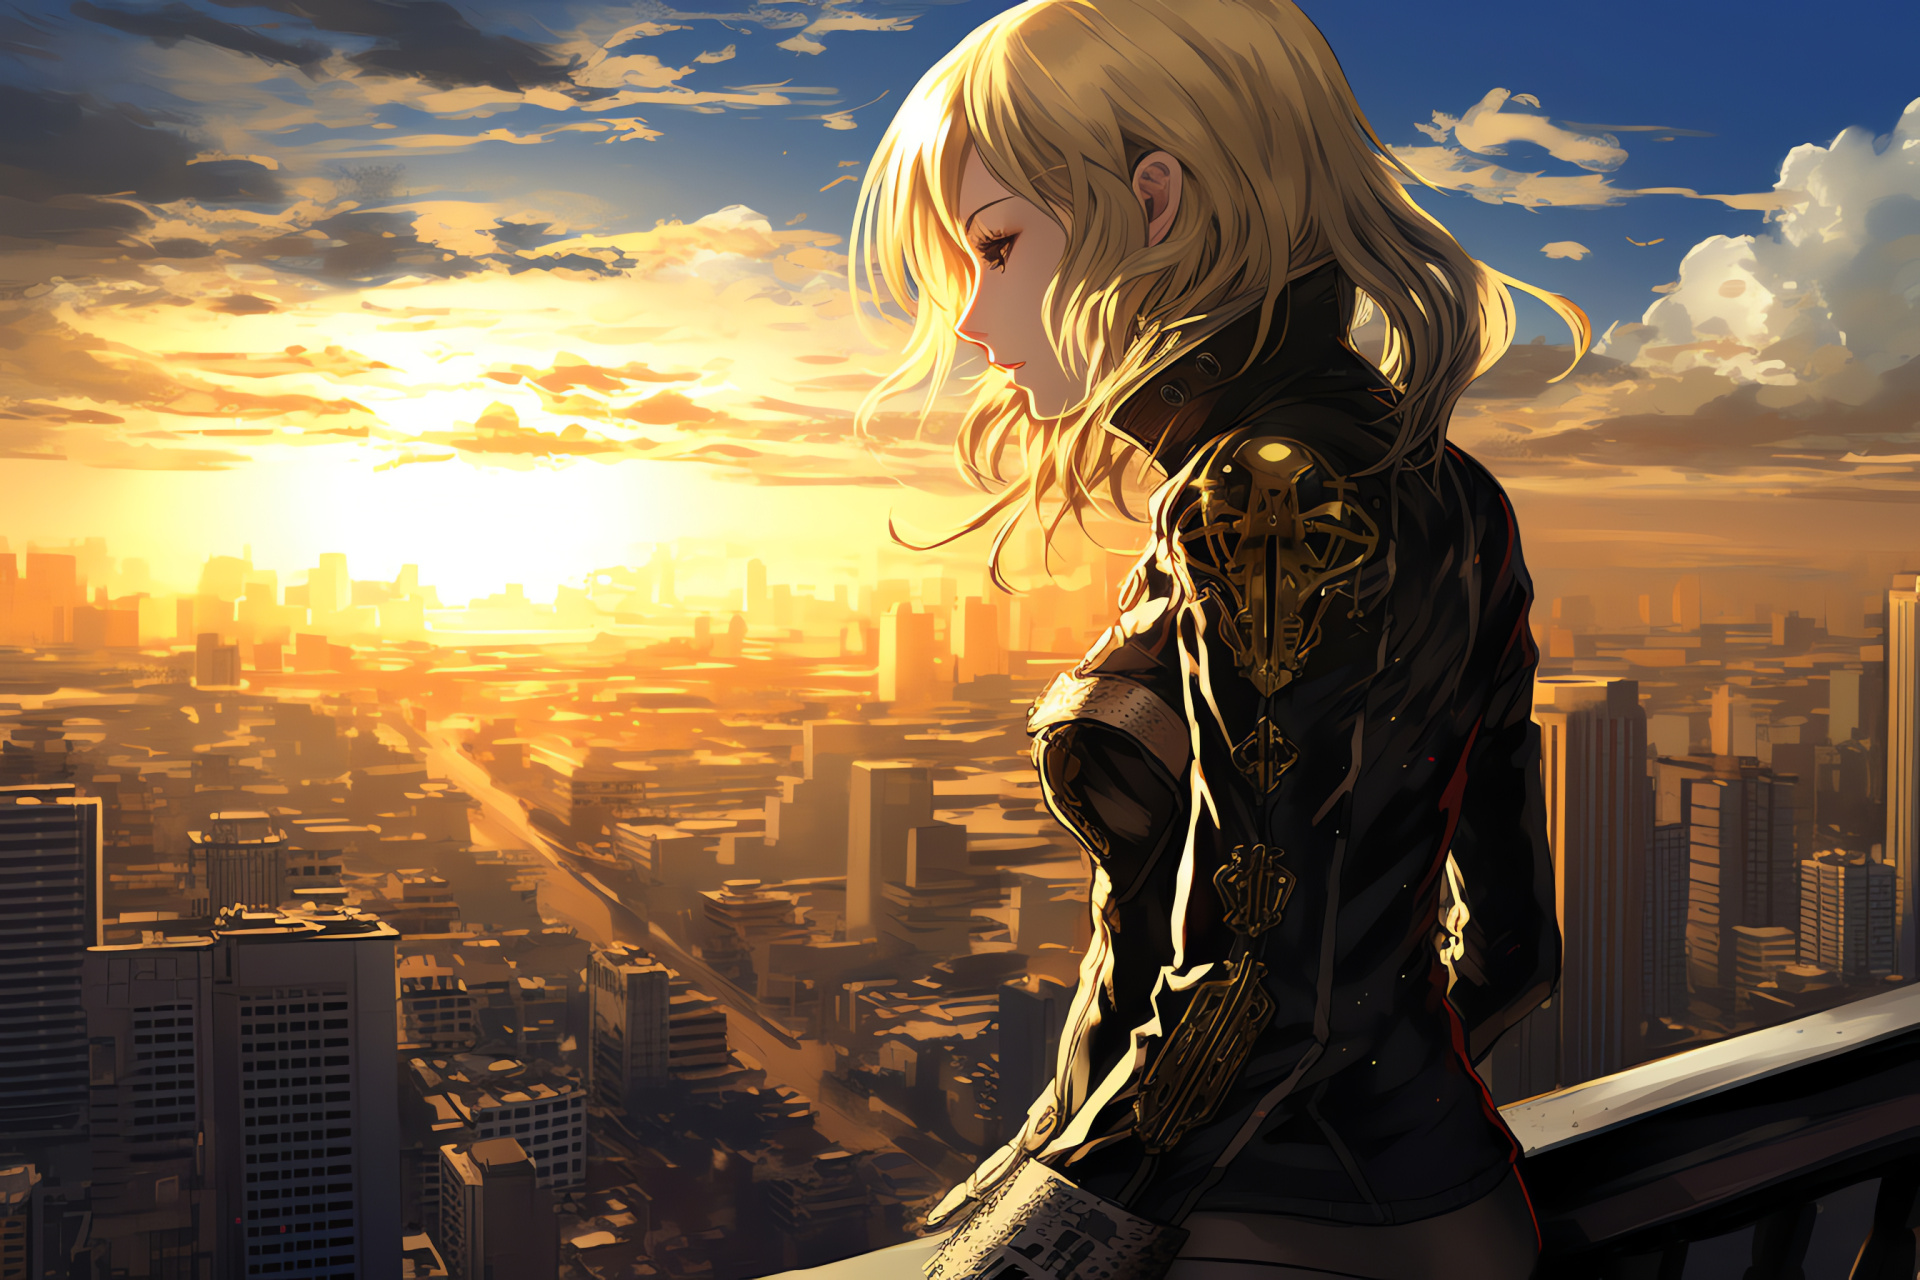 Aigis, Golden-hour backdrop, Skyscraper silhouette, Metallic structure reflection, Sunset ambiance, HD Desktop Wallpaper